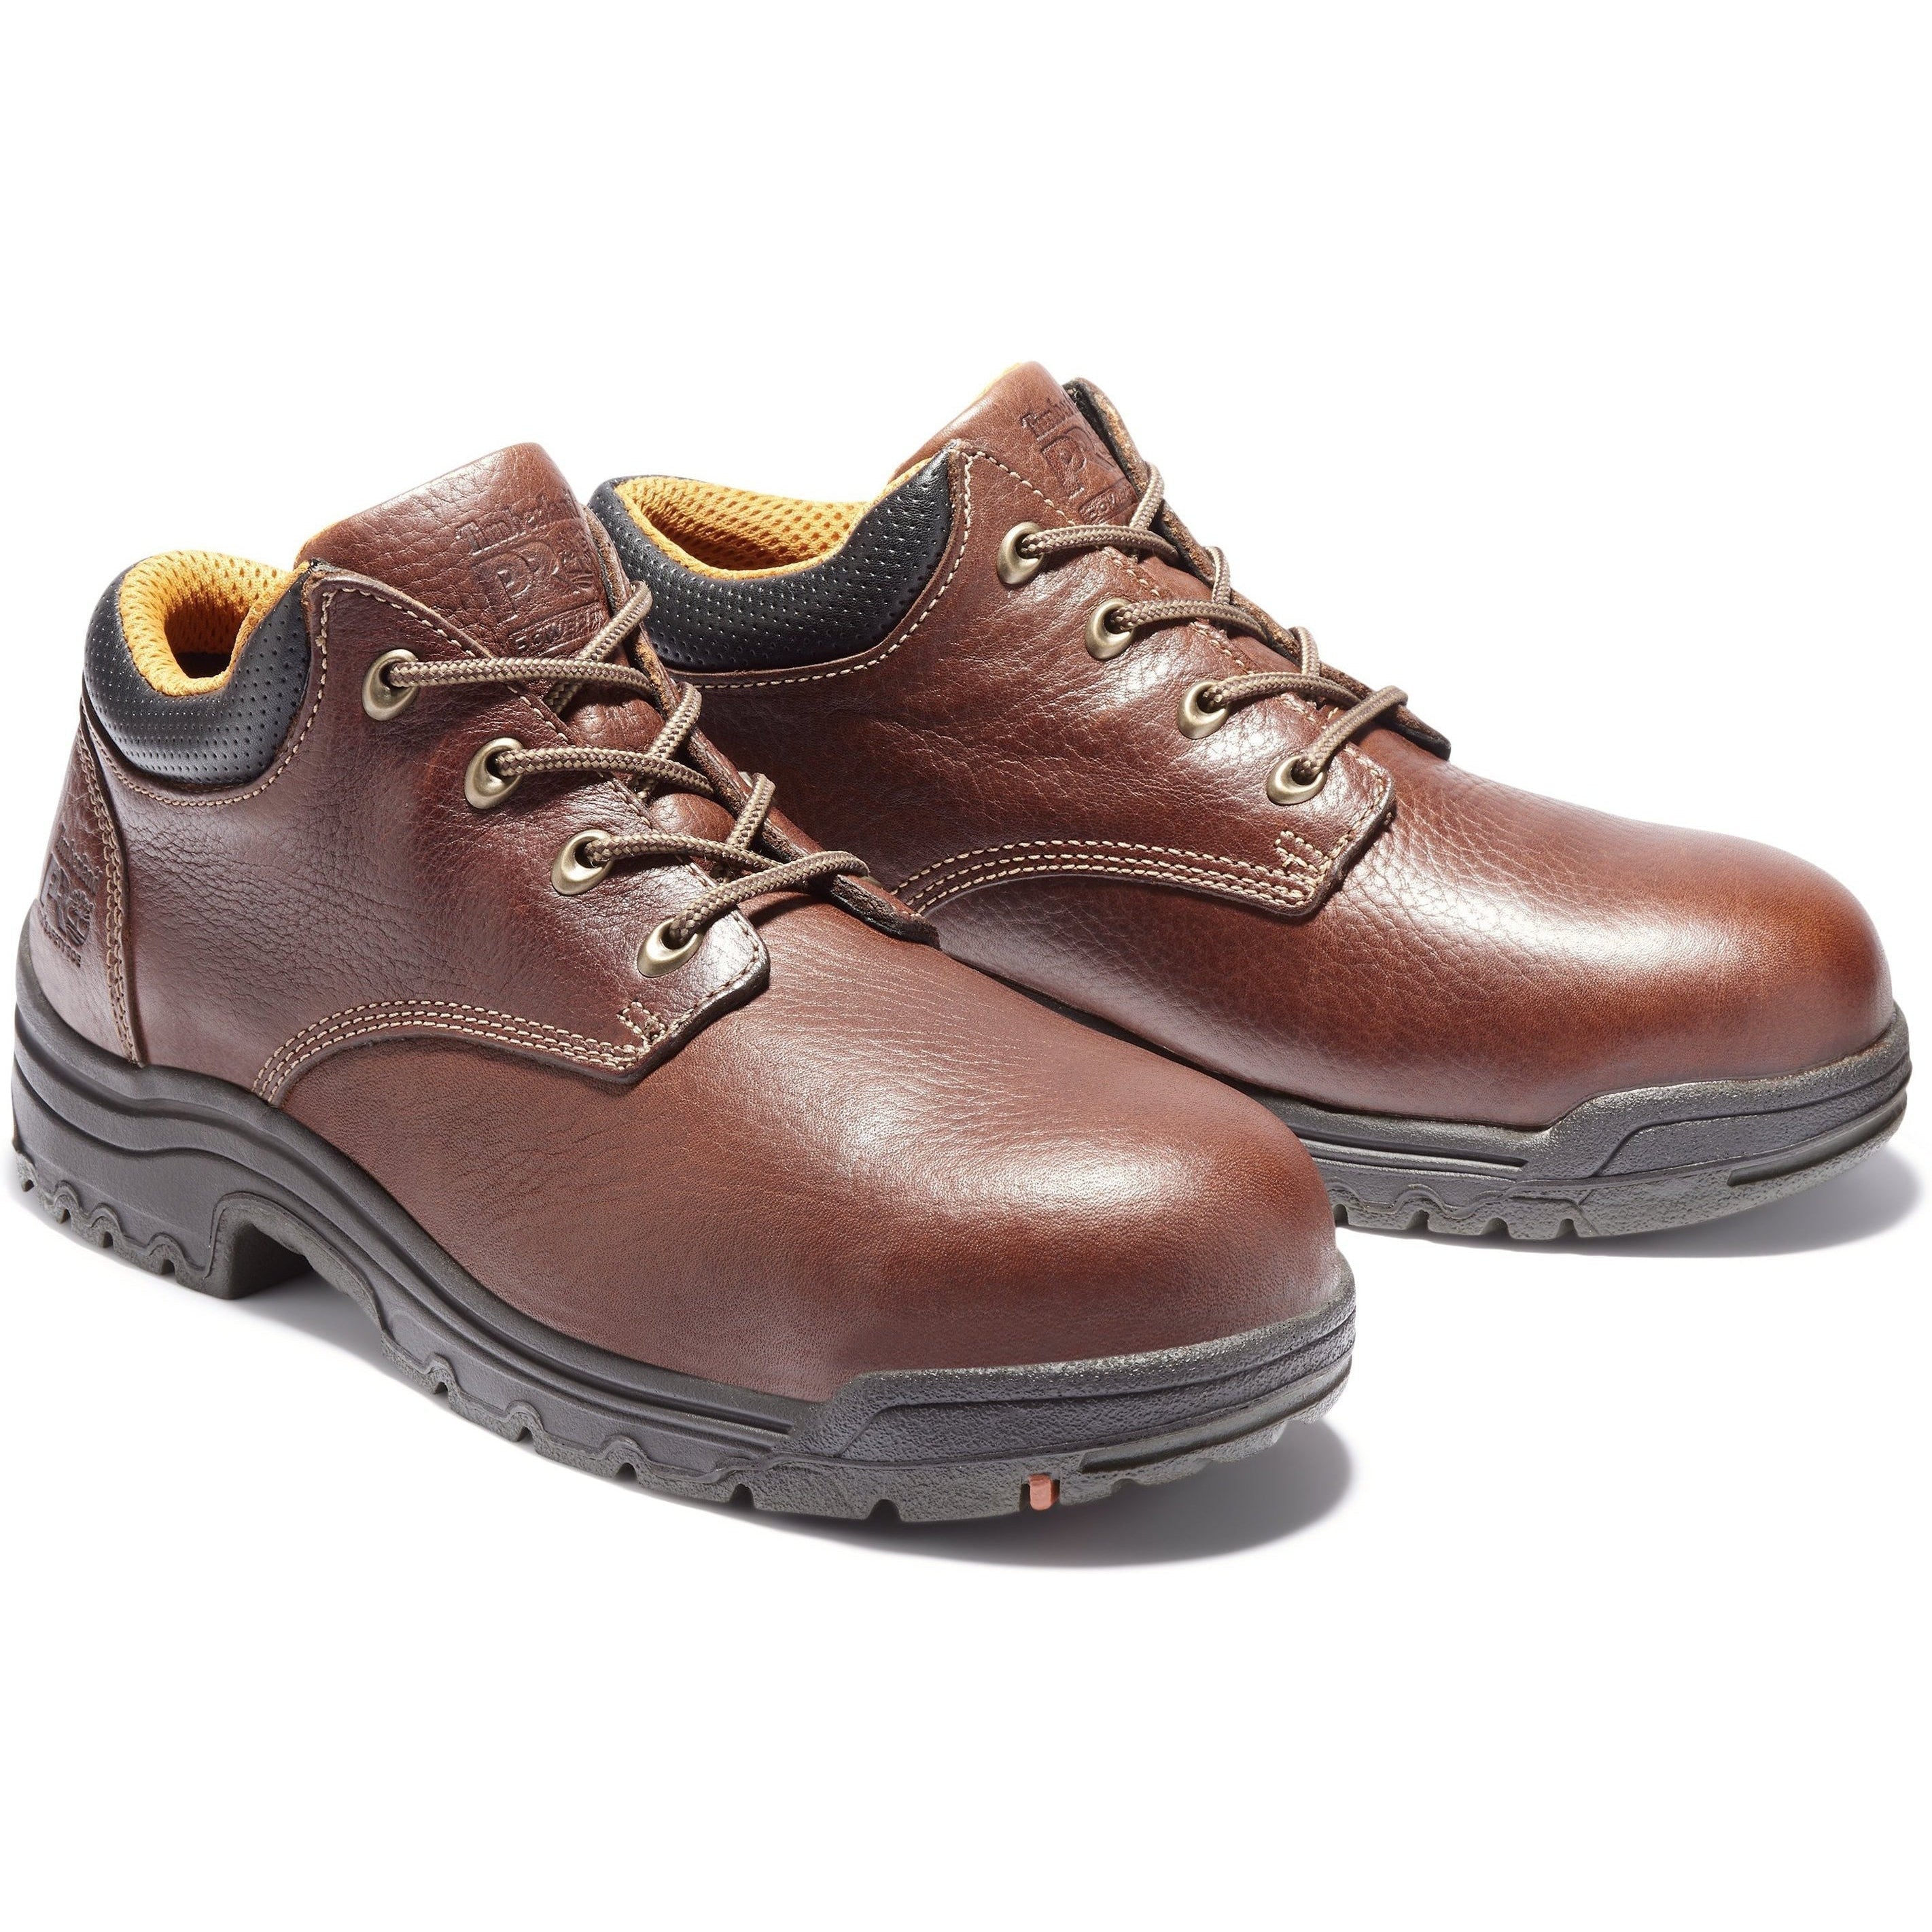 Timberland PRO Men's TiTAN Oxford Alloy Toe Work Shoe Brown TB047028210 7 / Medium / Brown - Overlook Boots